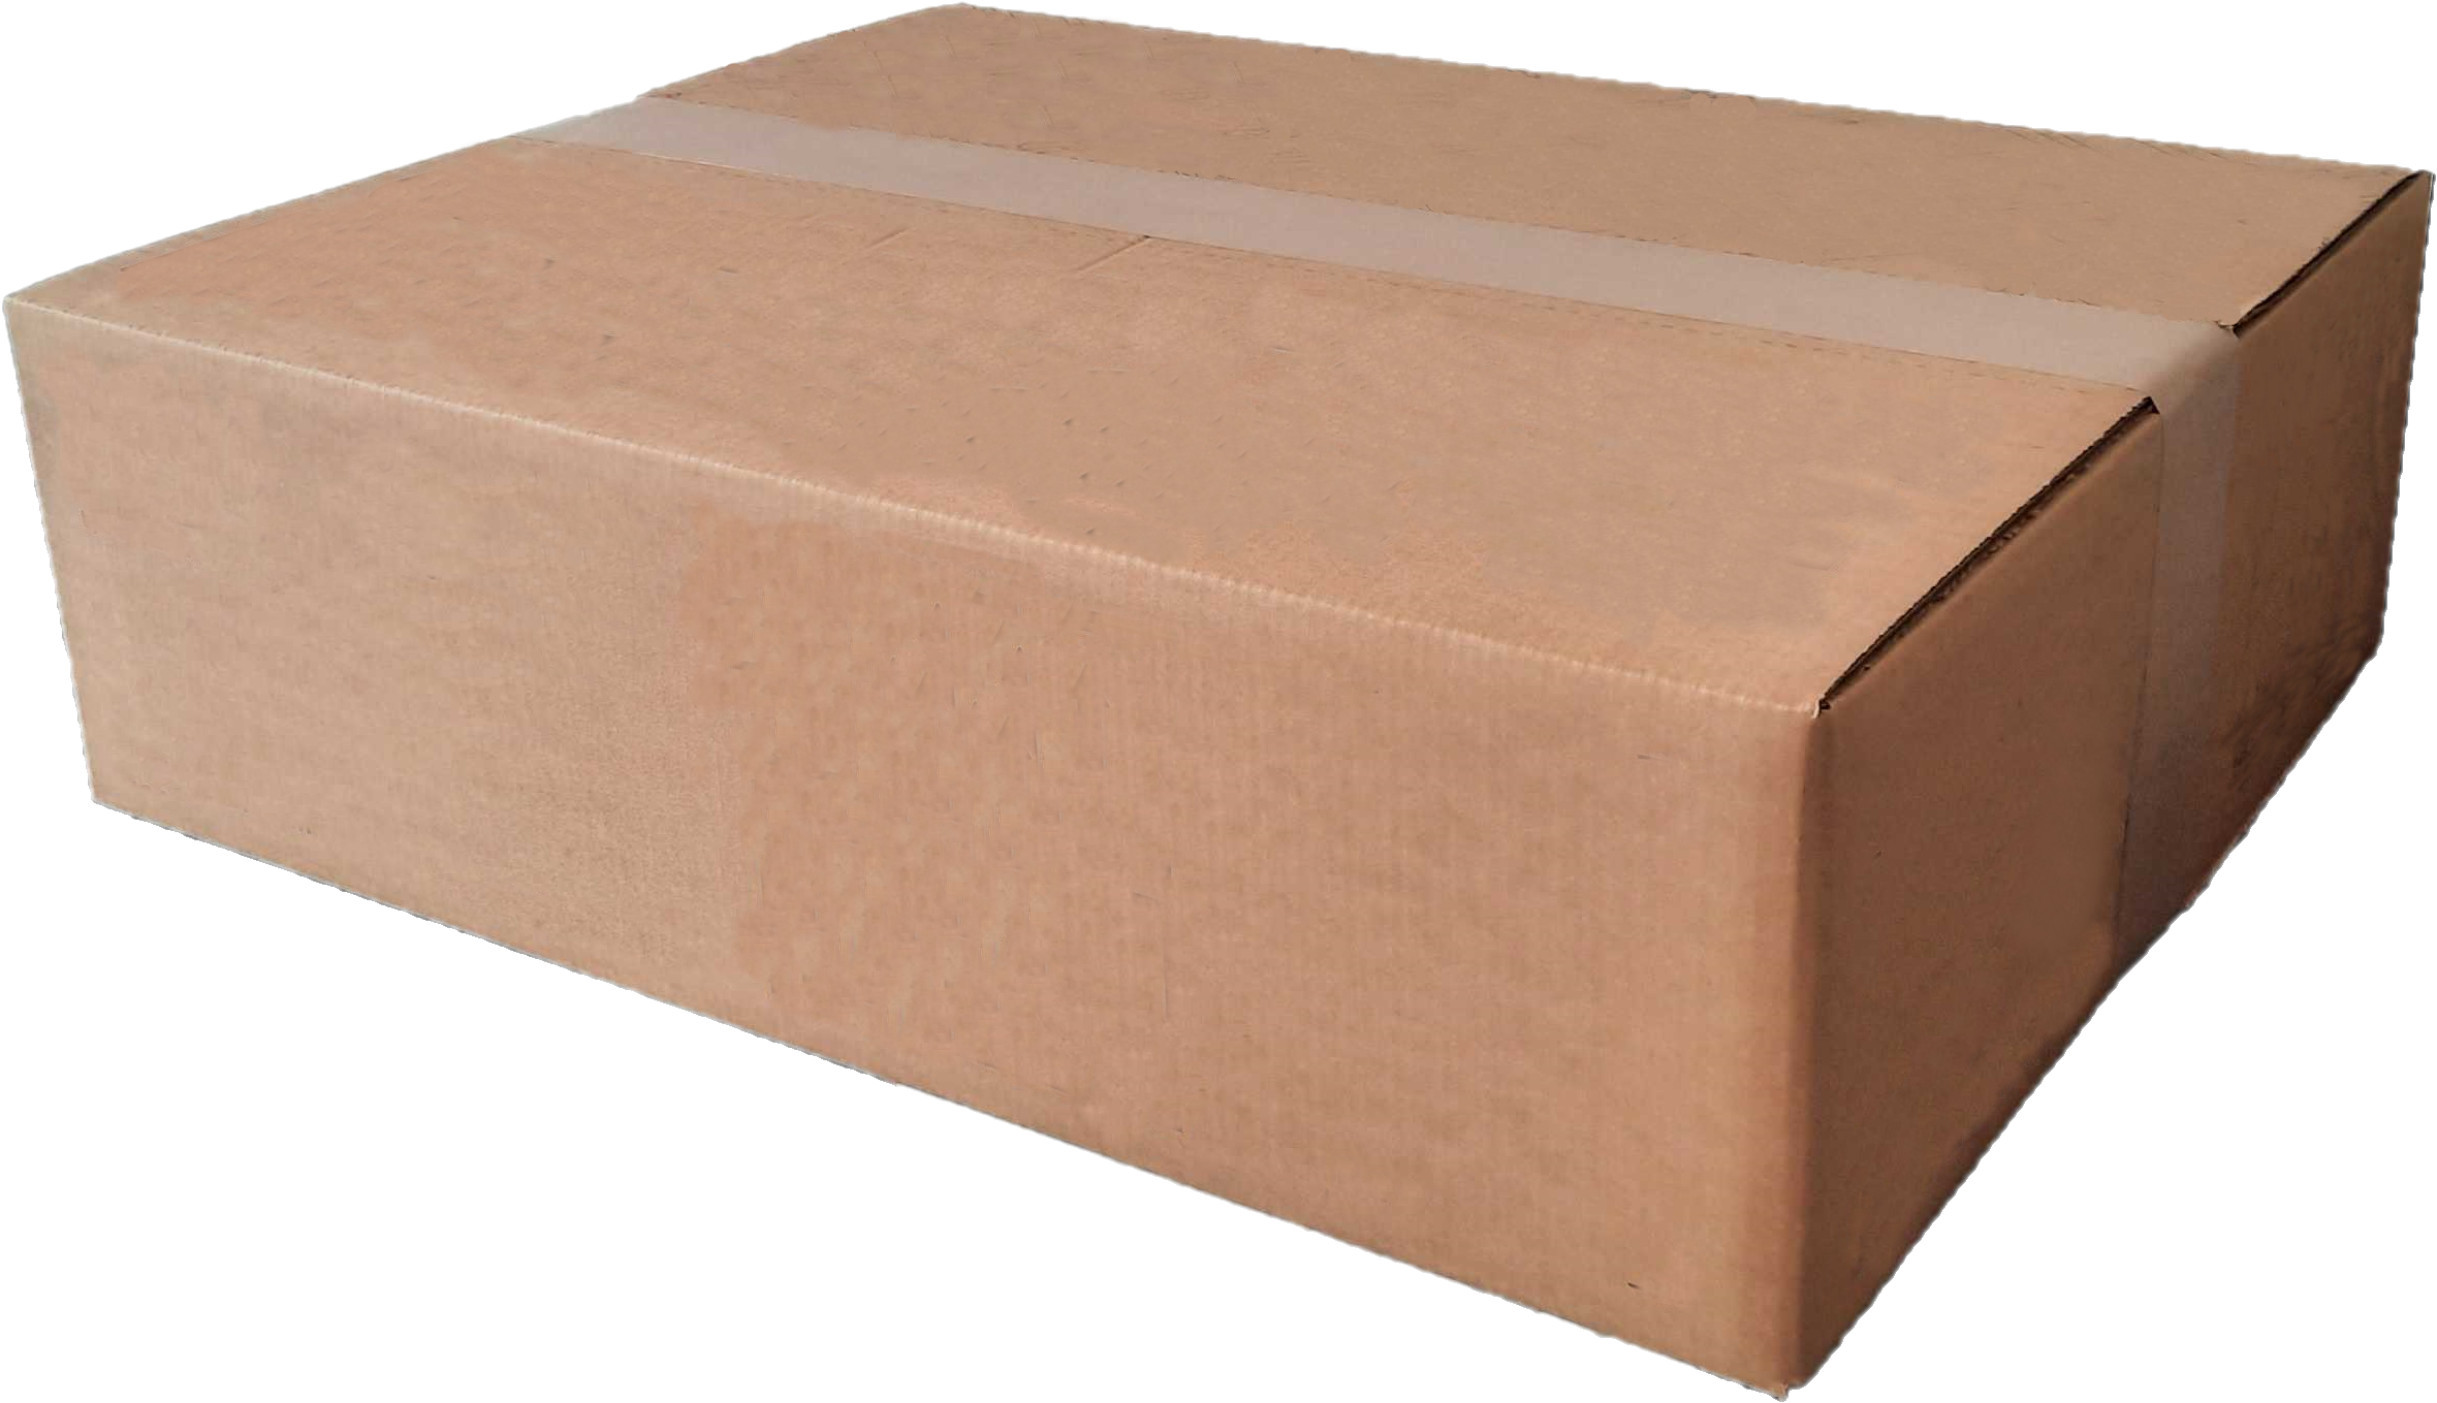 Verpacken des Enclosures für die Rücksendung - Individuelles Verpackungsmaterial